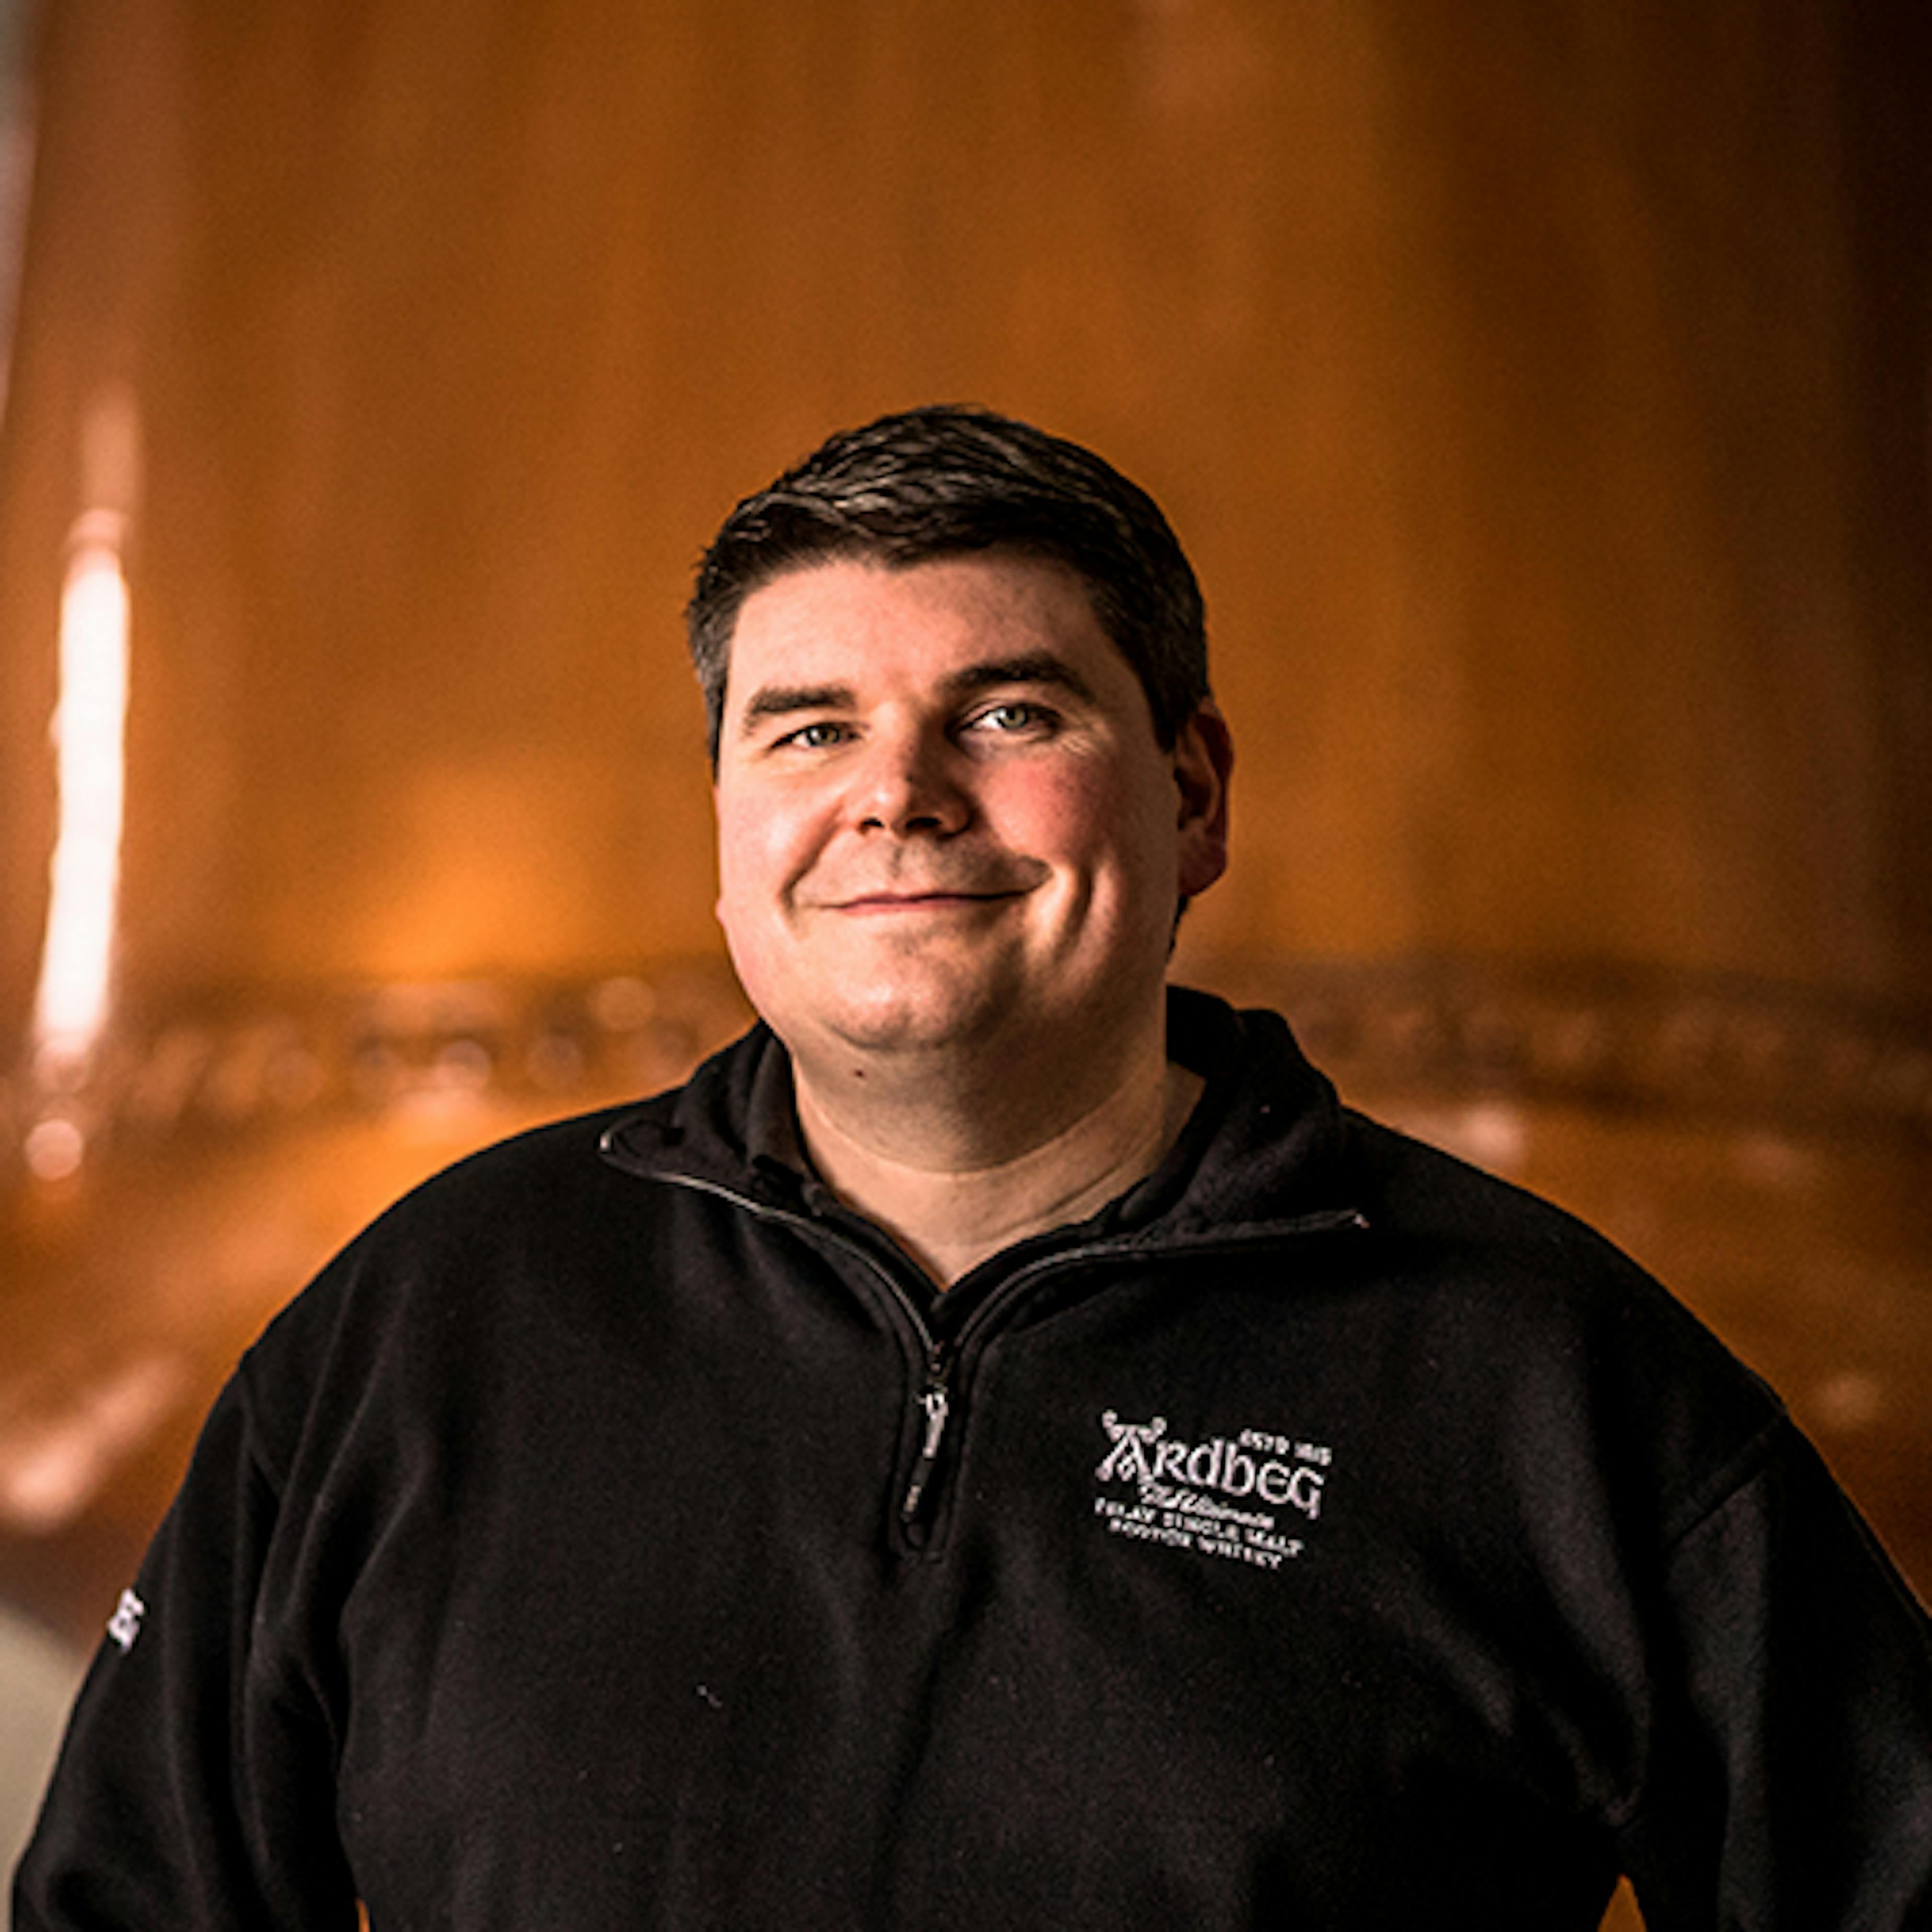 Colin Gordon, Ardbeg Distillery Manager © Ardbeg